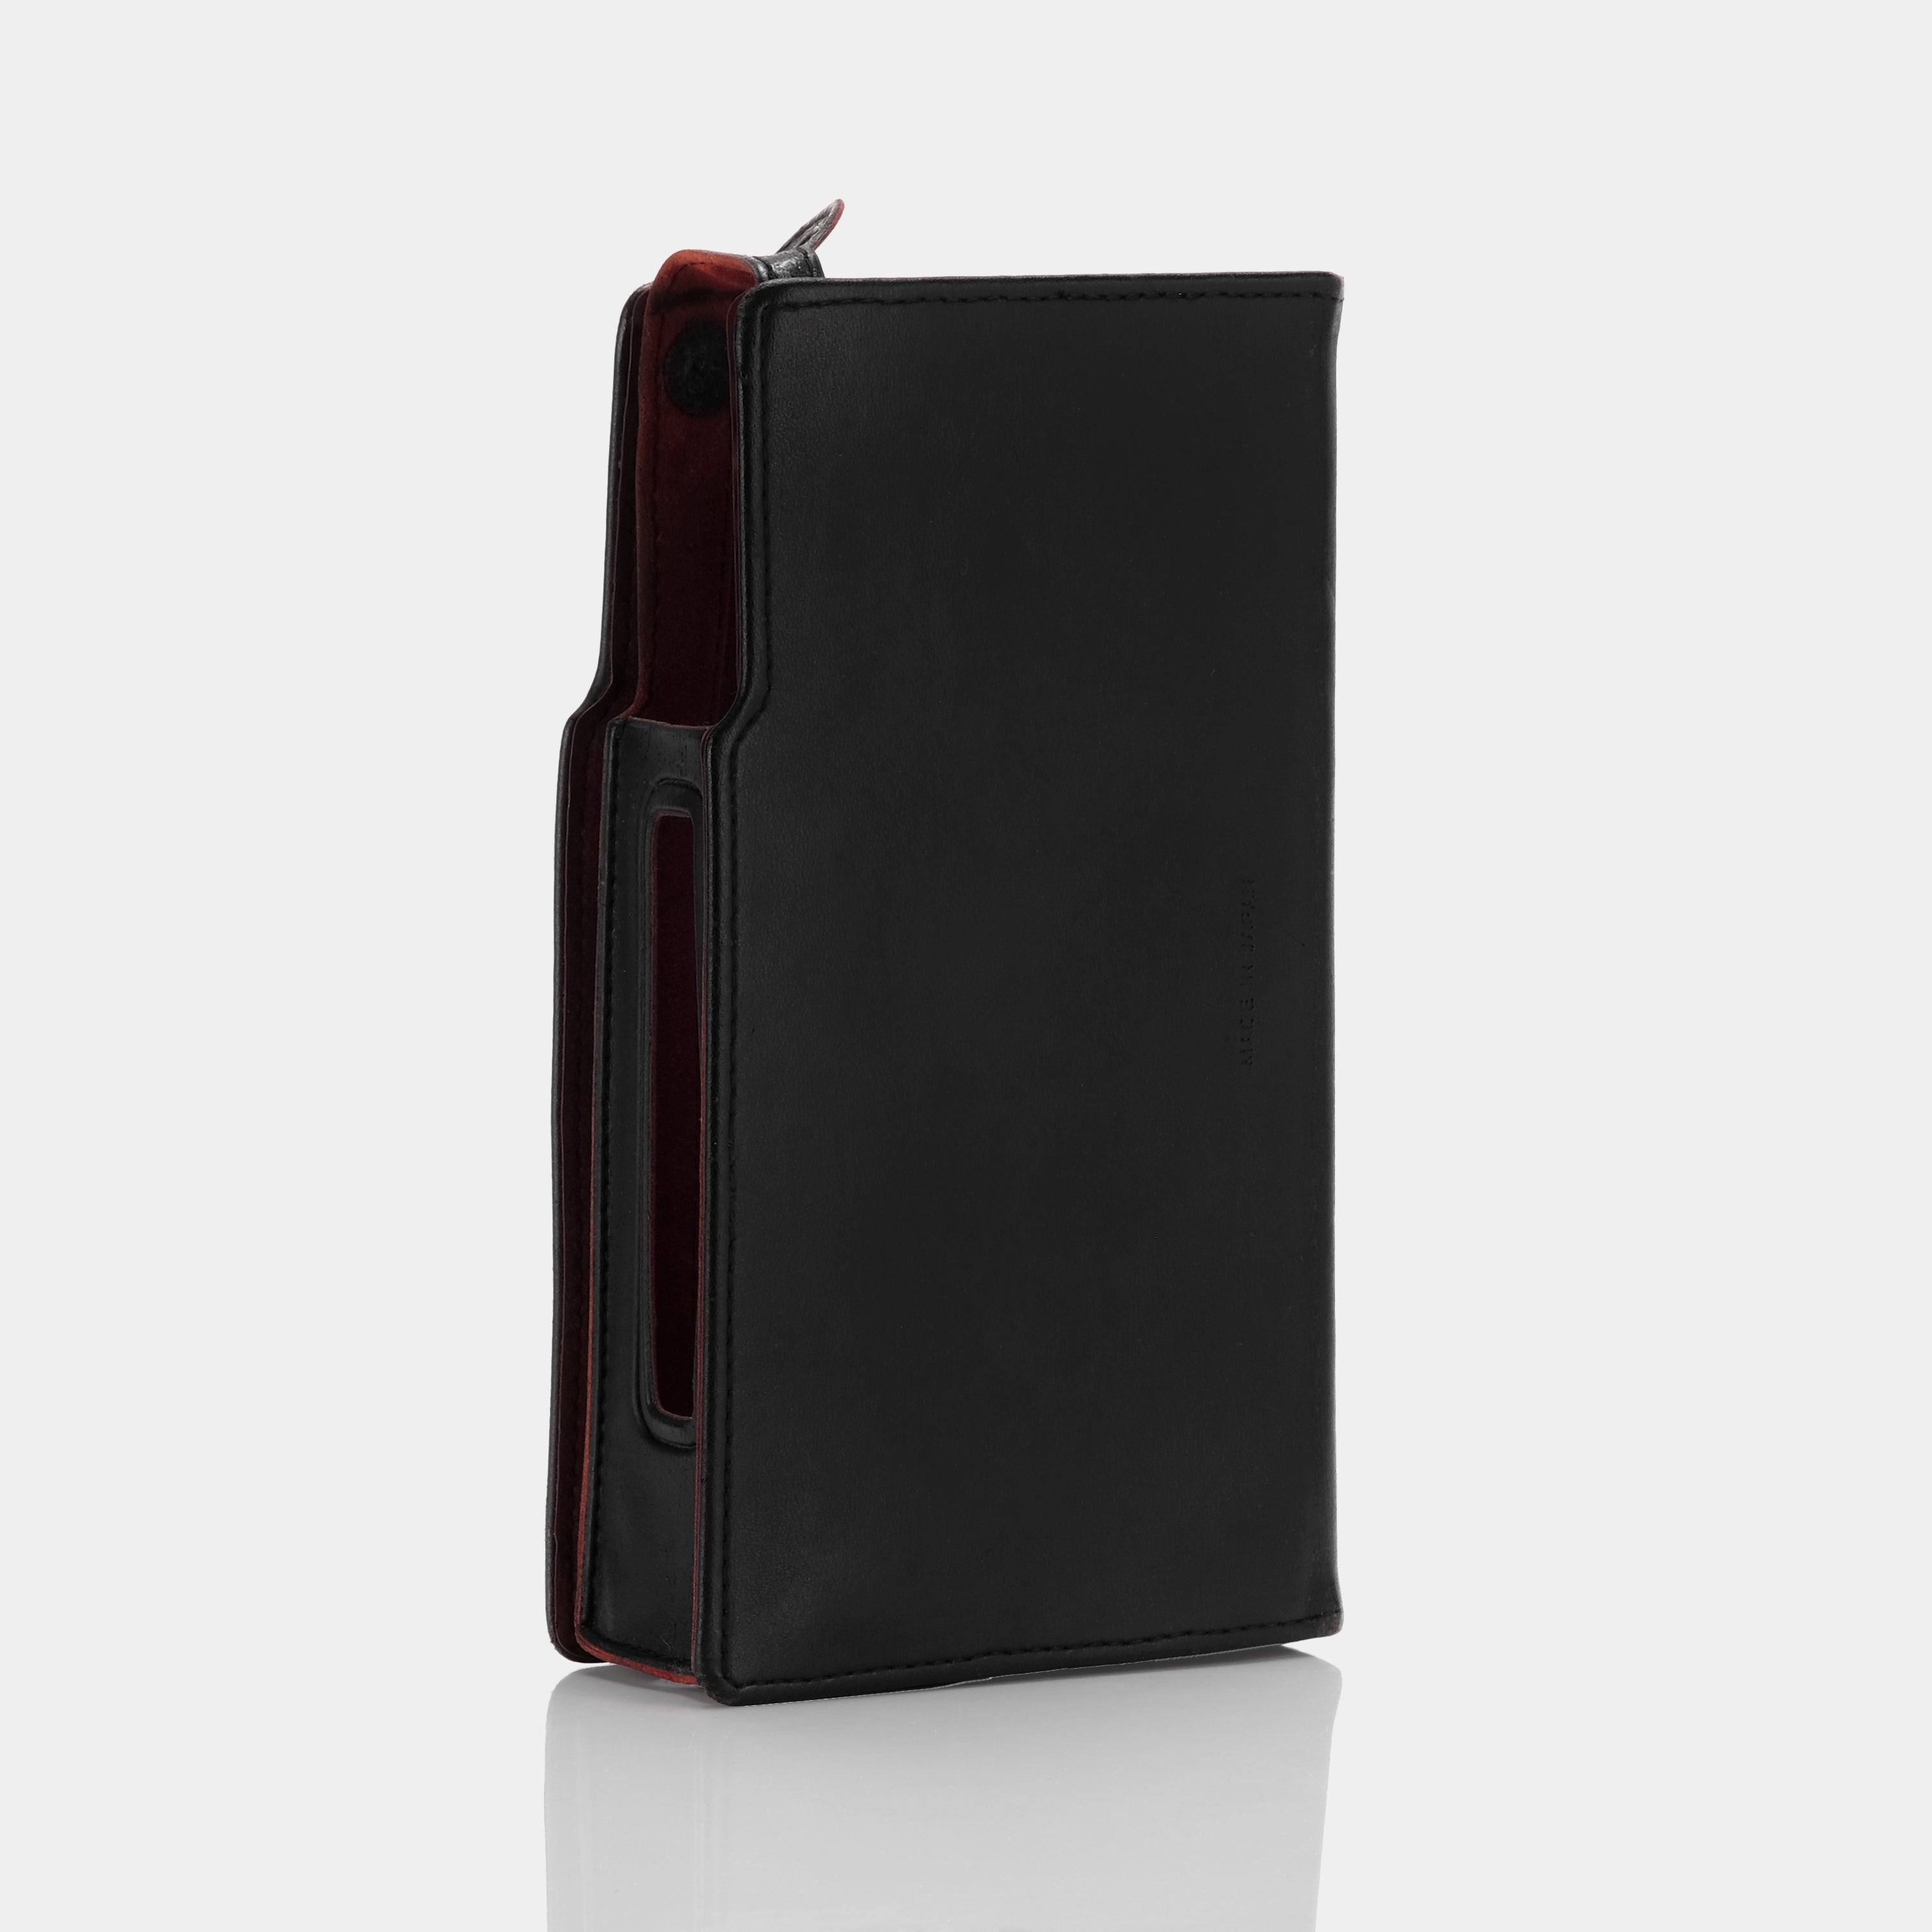 Sony Walkman Professional WM-D6 Black Leather Case